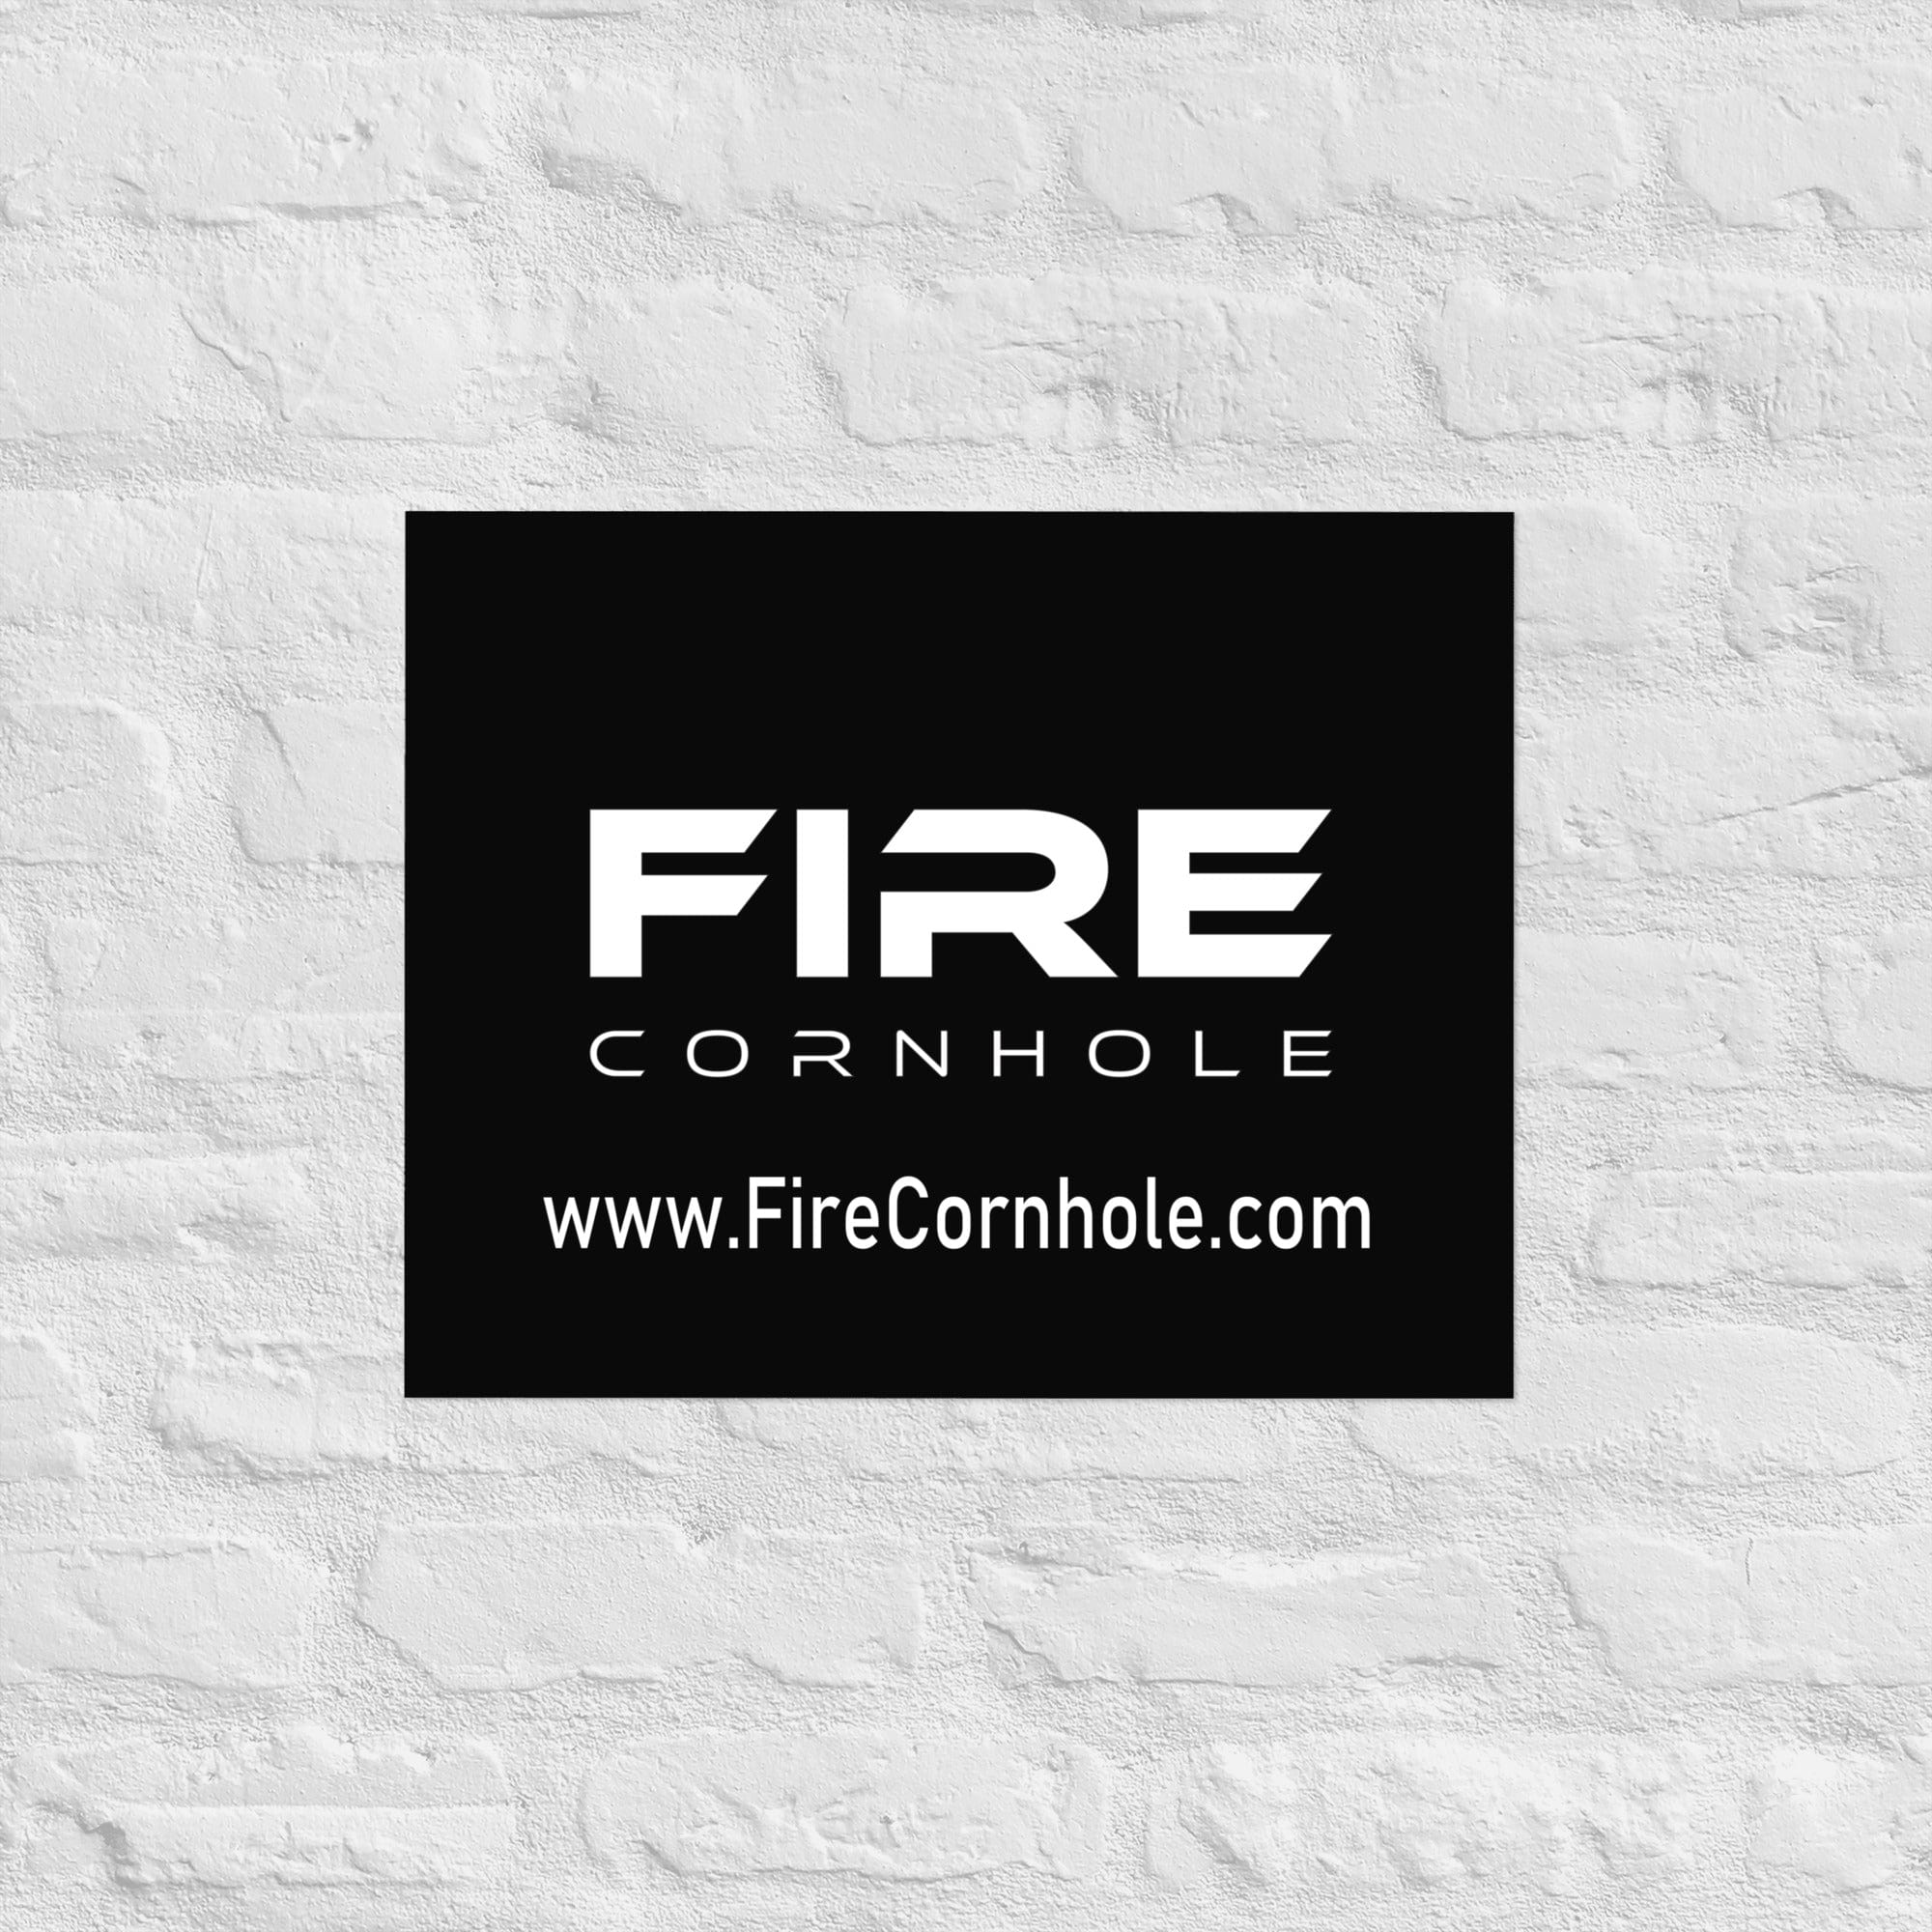 Fire Cornhole Fire Cornhole Poster